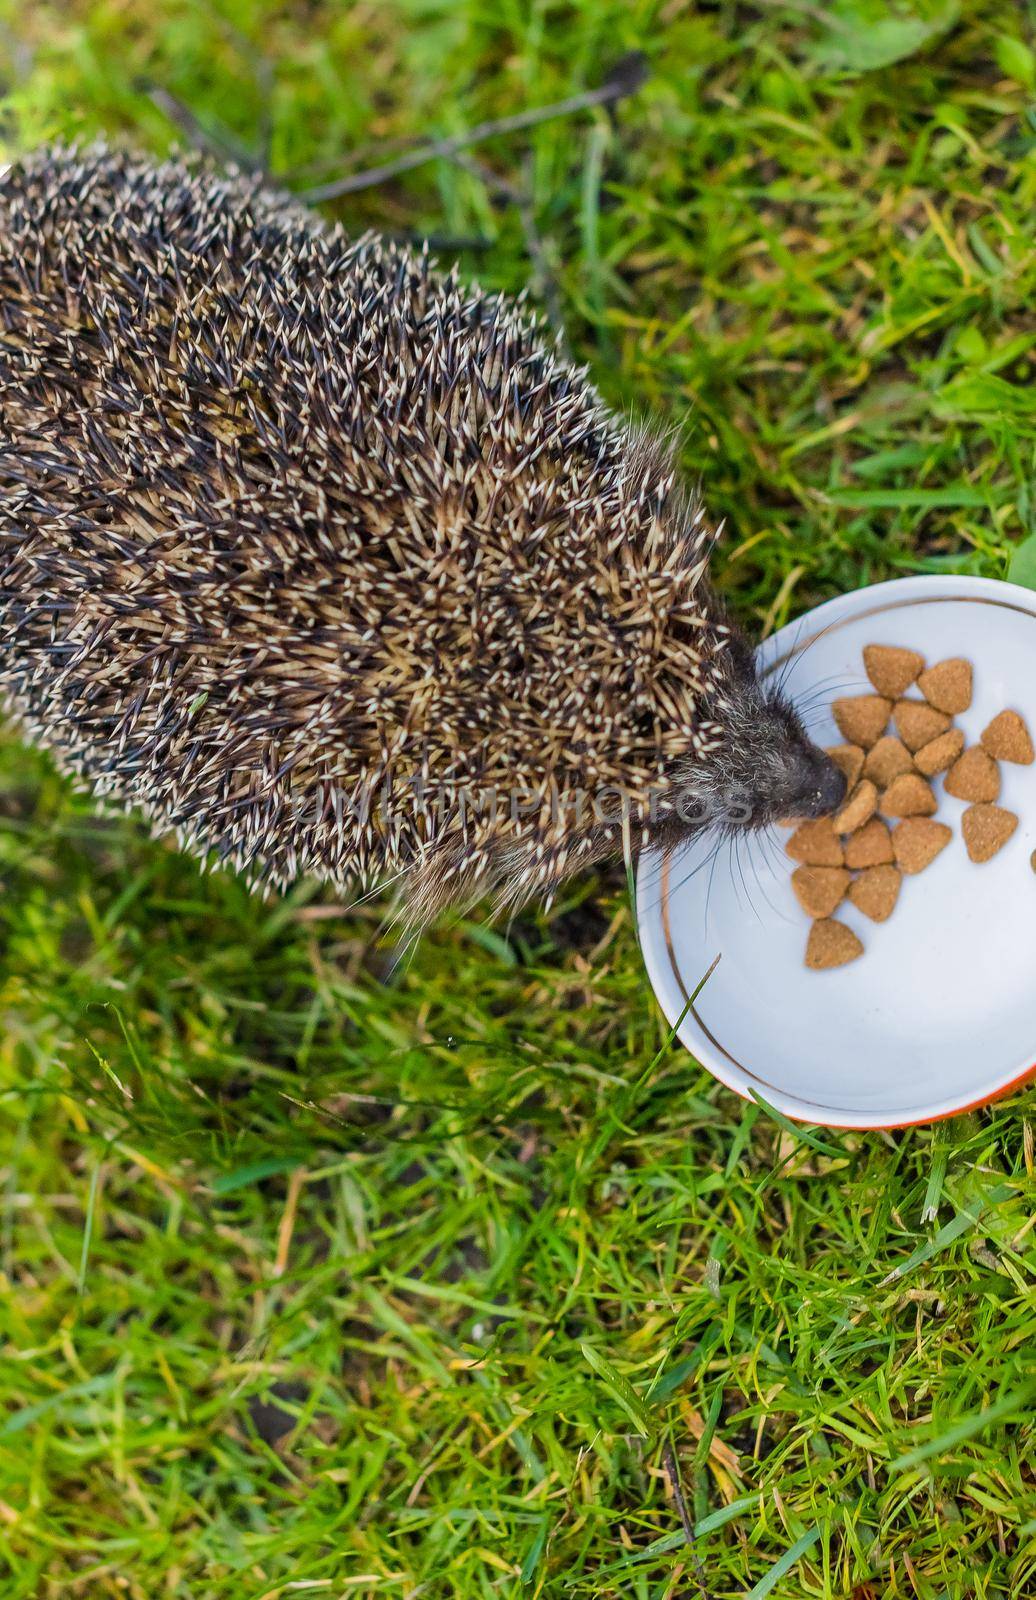 Wild Hedgehog eating from a dog bowl.Hedgehog eating dry cat food, summer garden.small grey prickly hedgehog gathering to drink milk or eat